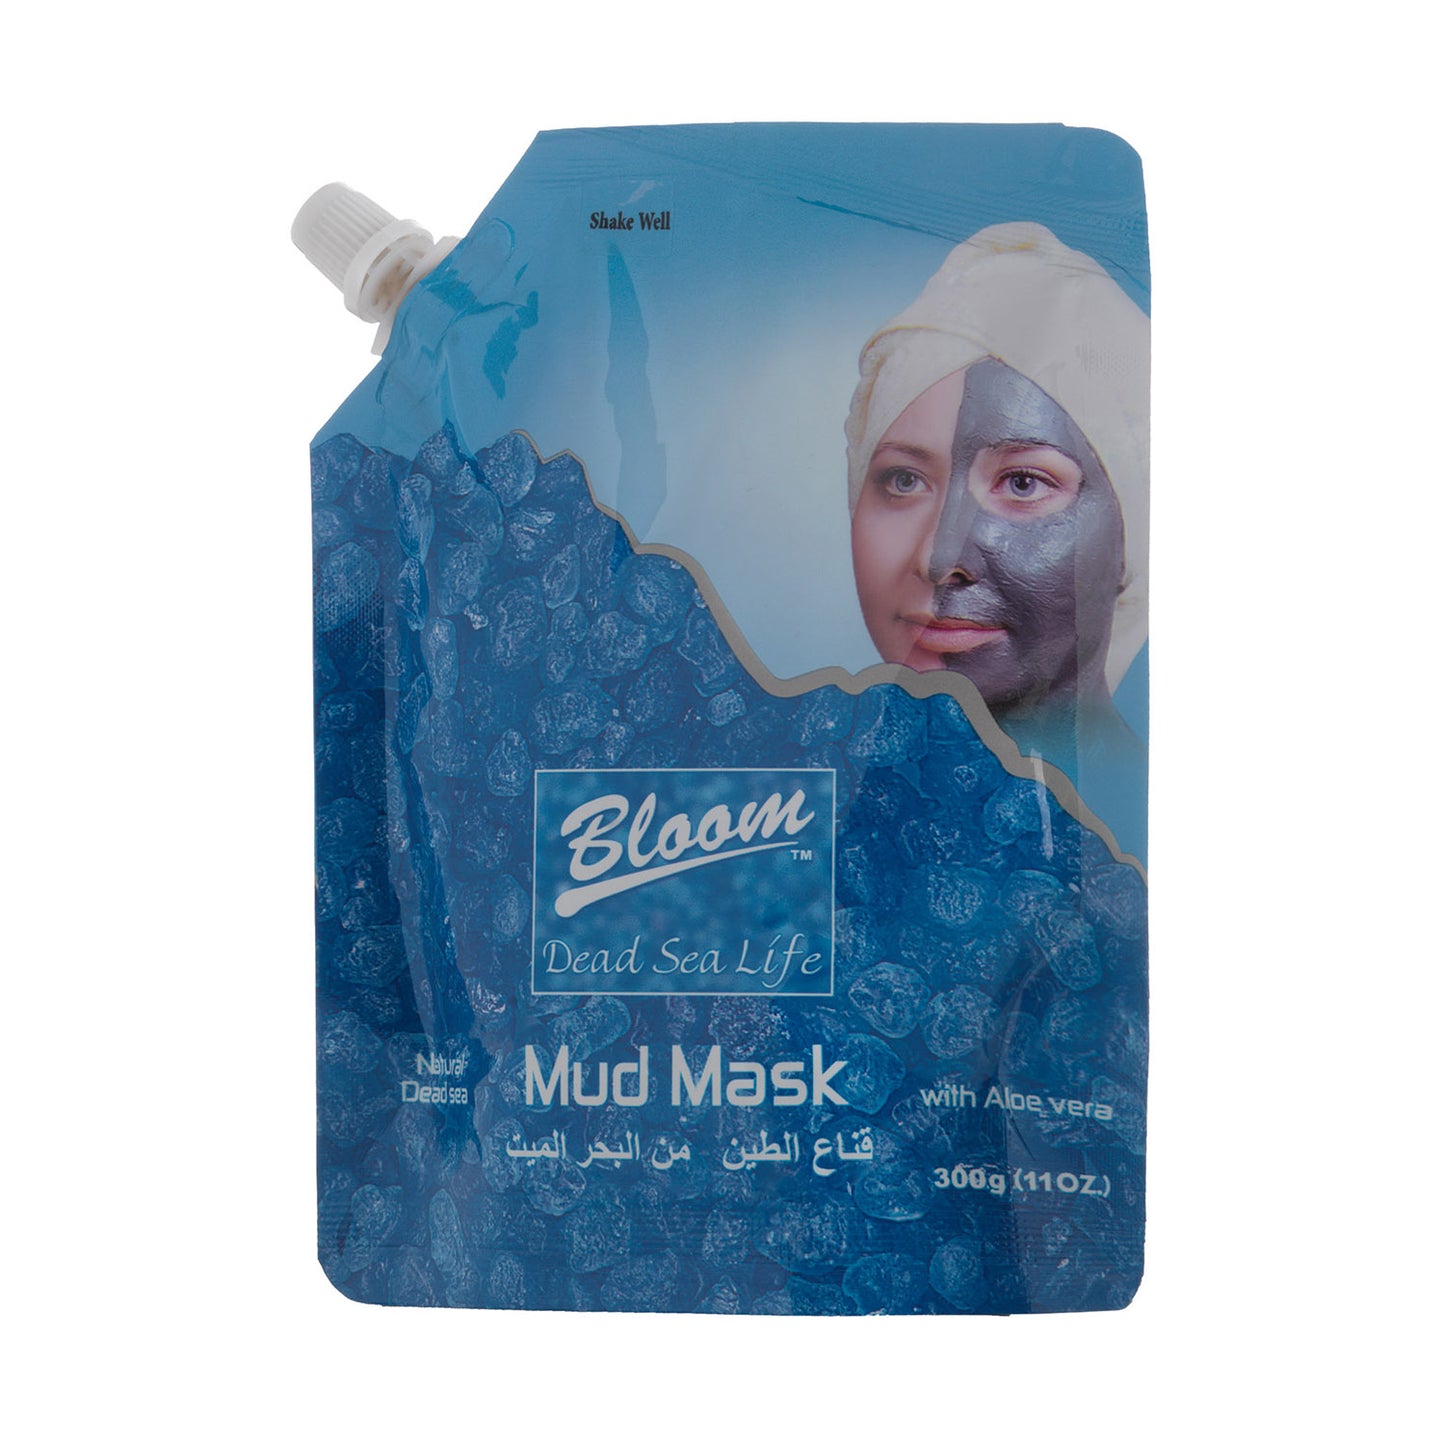 Bloom Dead Sea Mud Mask with Aloe Vera -  Nozzel bag  300g